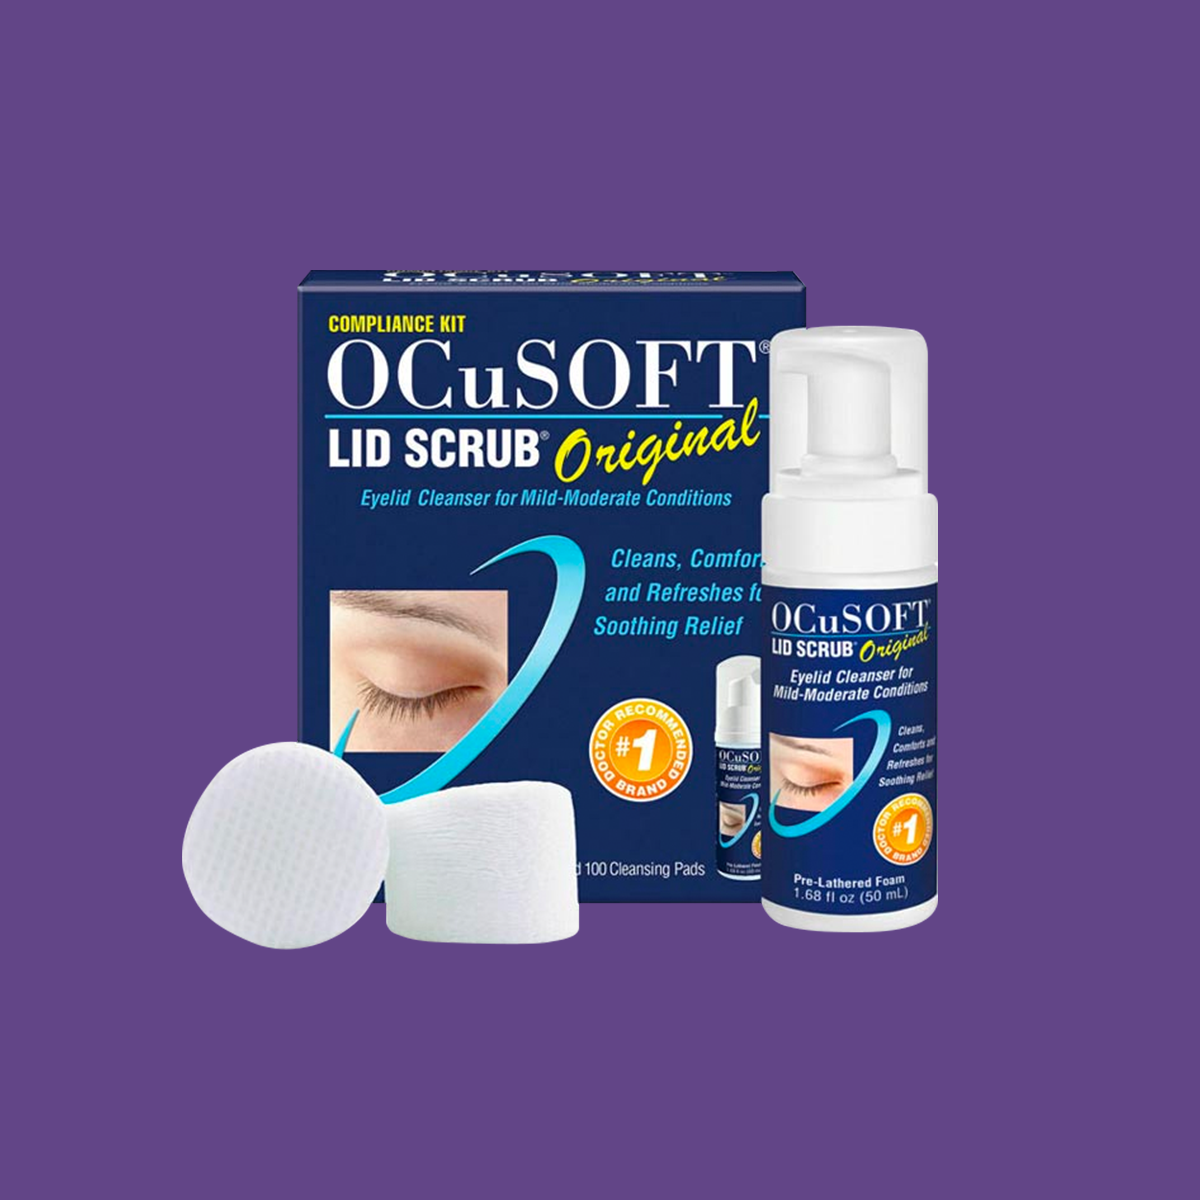 Ocusoft Lid Scrub  Original Compliance Kit Foam and Wipes